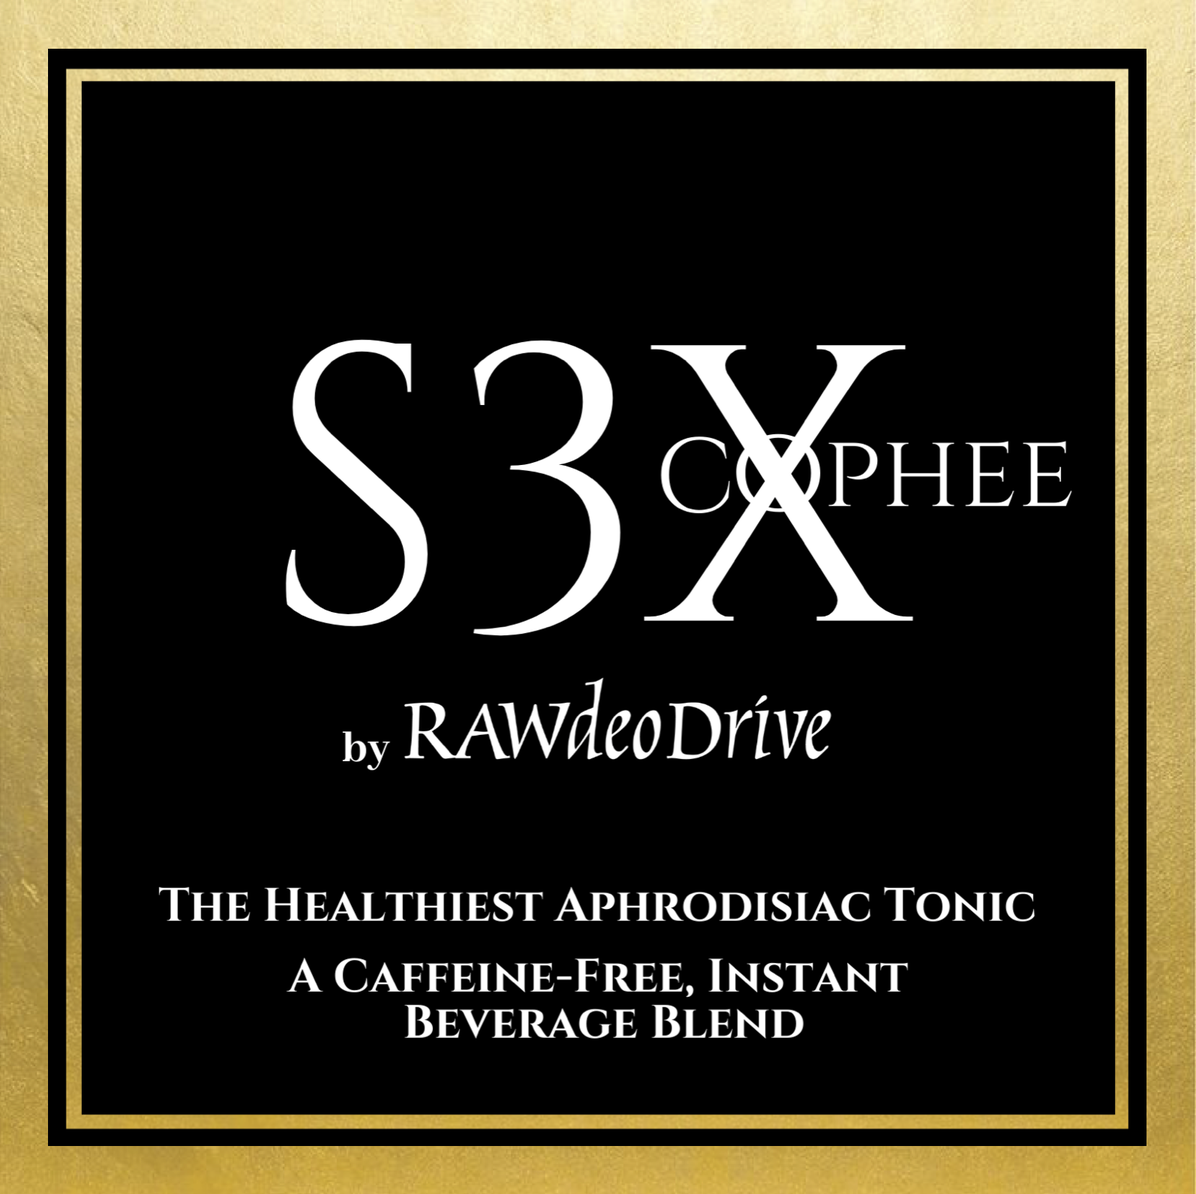 s3x cophee label